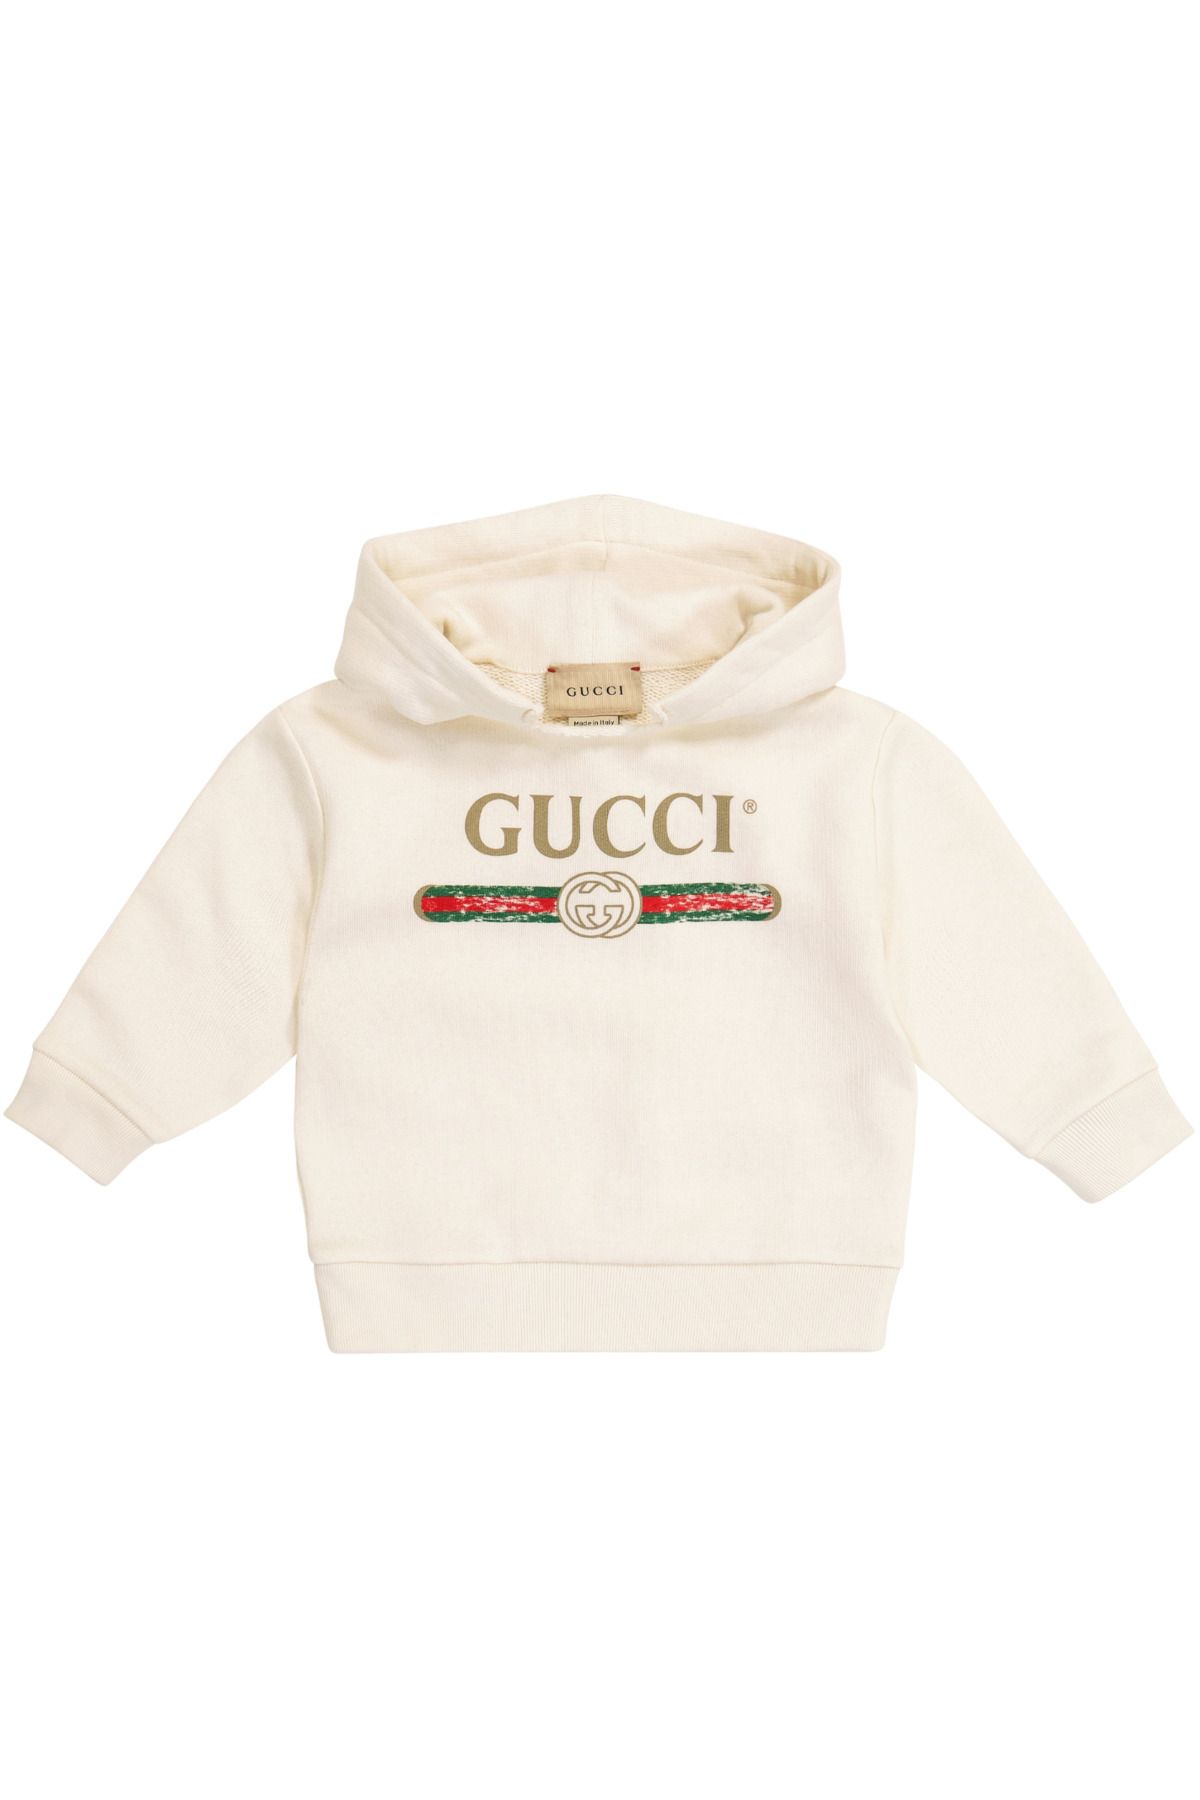 Gucci Cotton Baby Sweatshirt